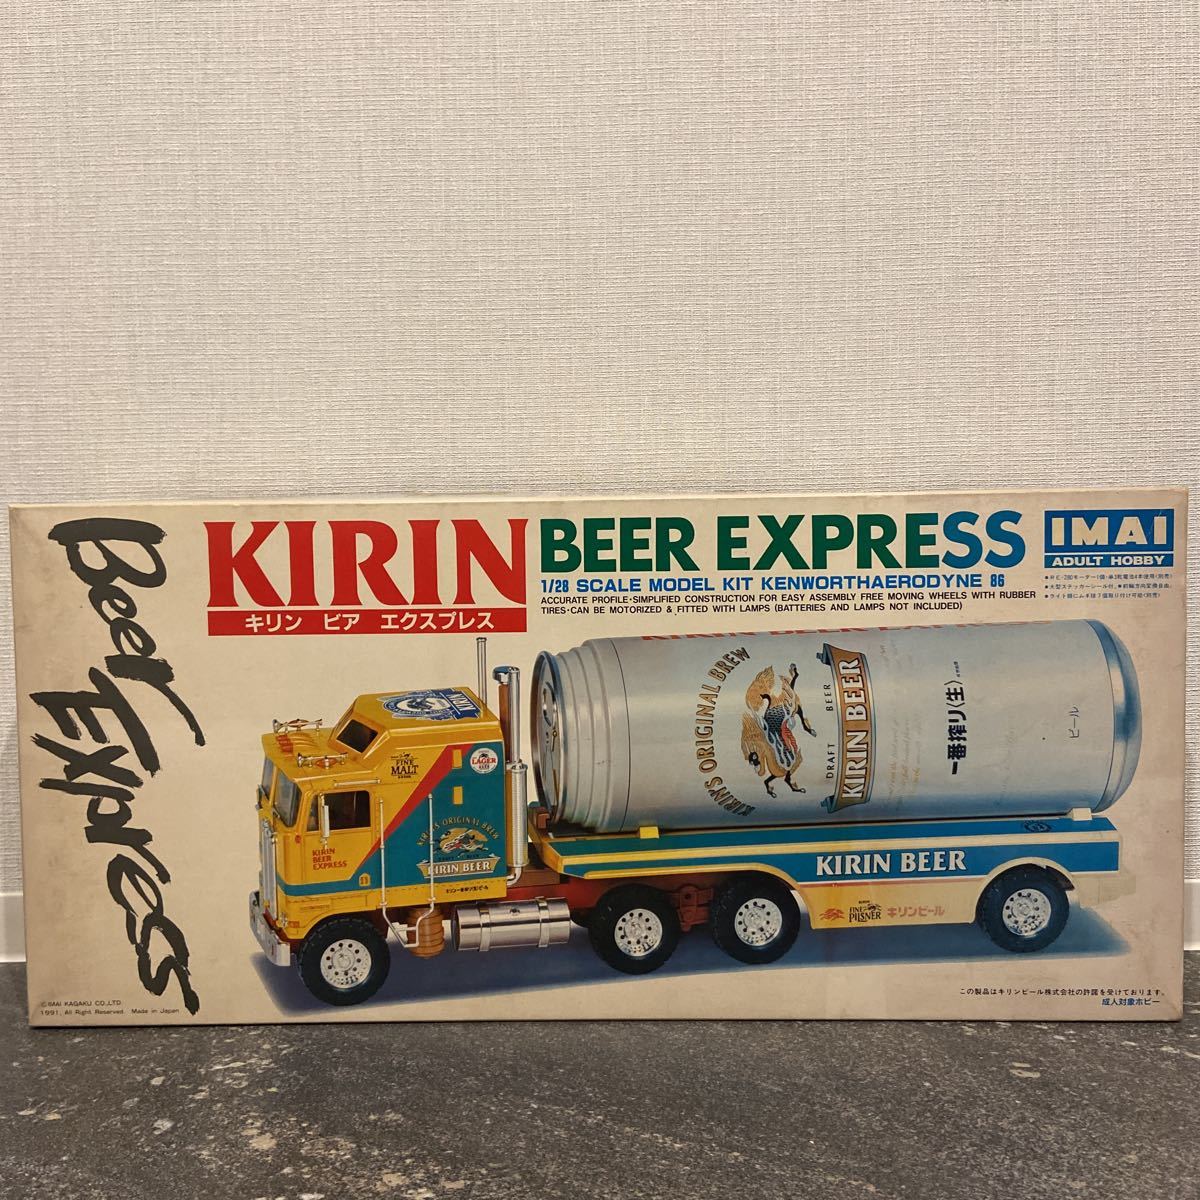 18 Off 未組立 イマイ 1 28 キリン ビール エクスプレス Imai Kirin Beer Express トレーラー